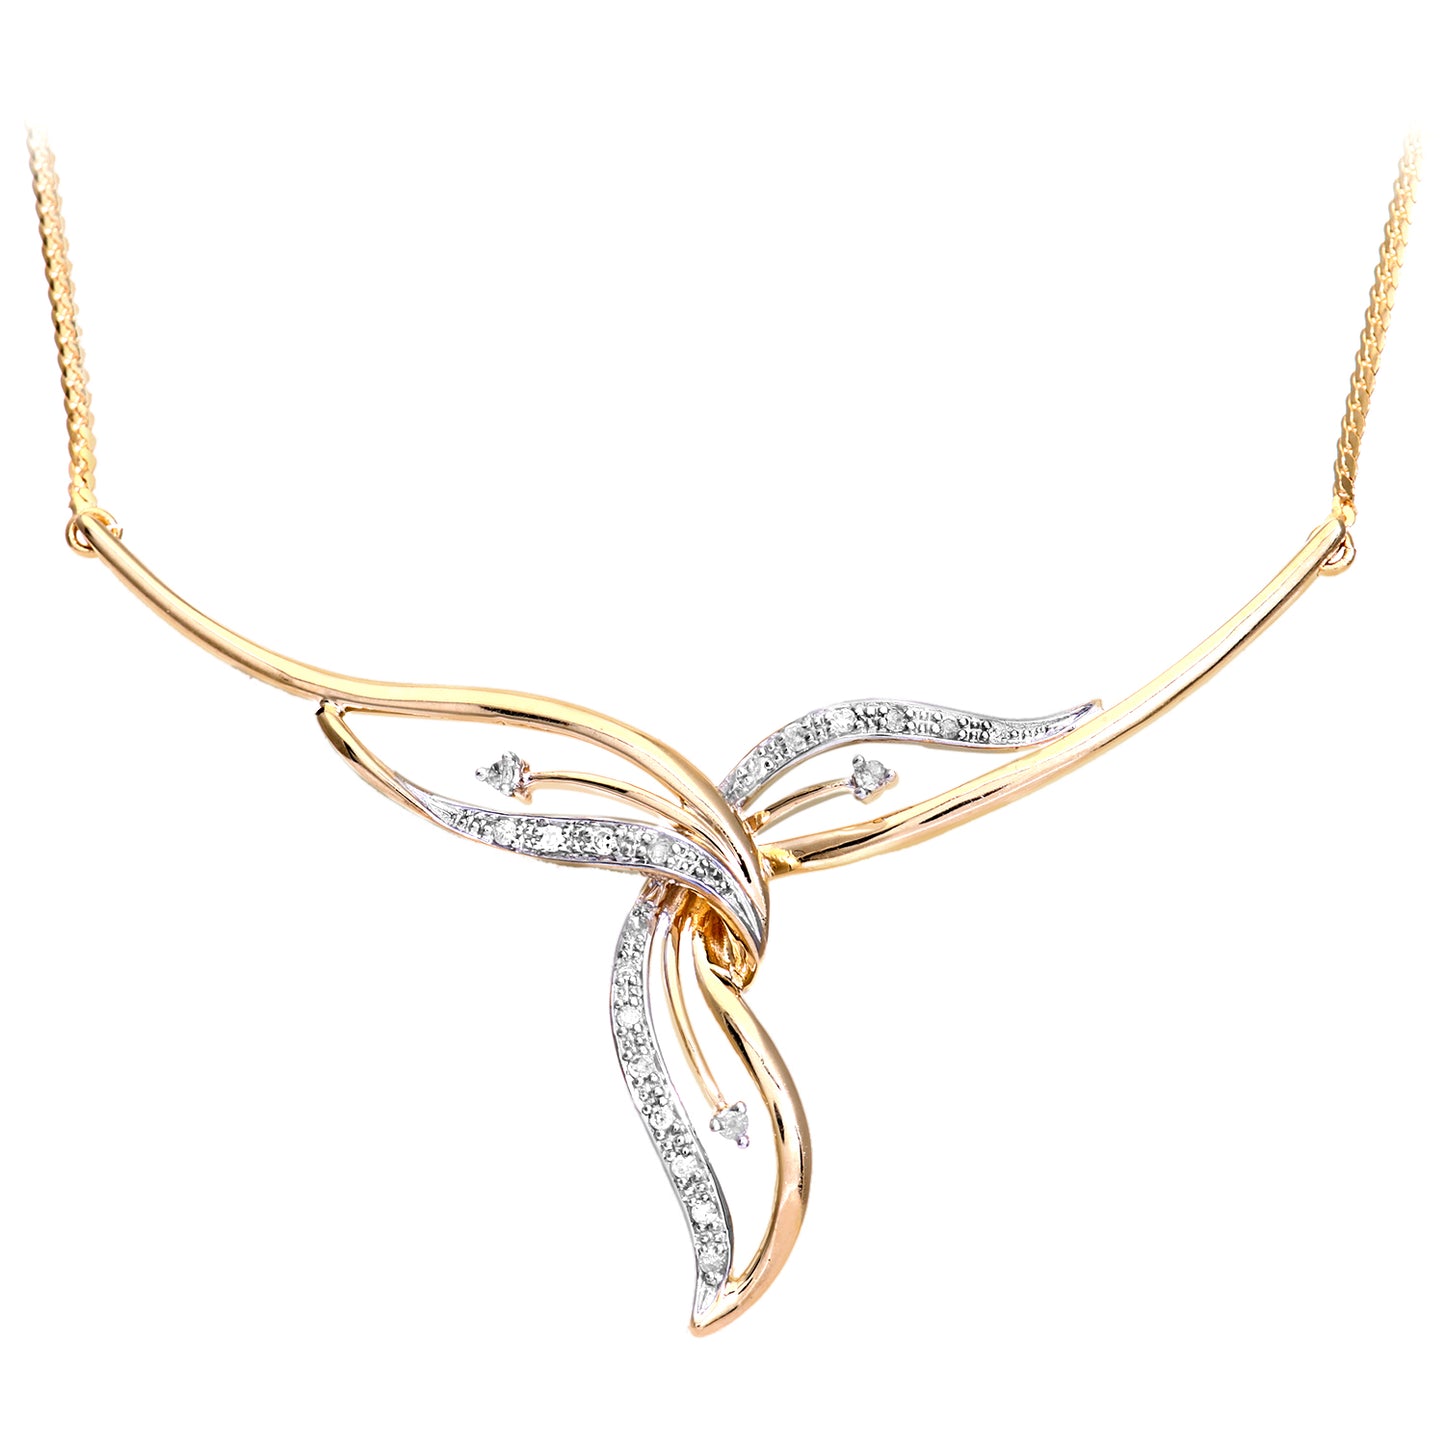 9ct Gold  10pts Diamond Cravat Scarf Tie Lavalier Necklace 18 inch - PNEAXL01615Y